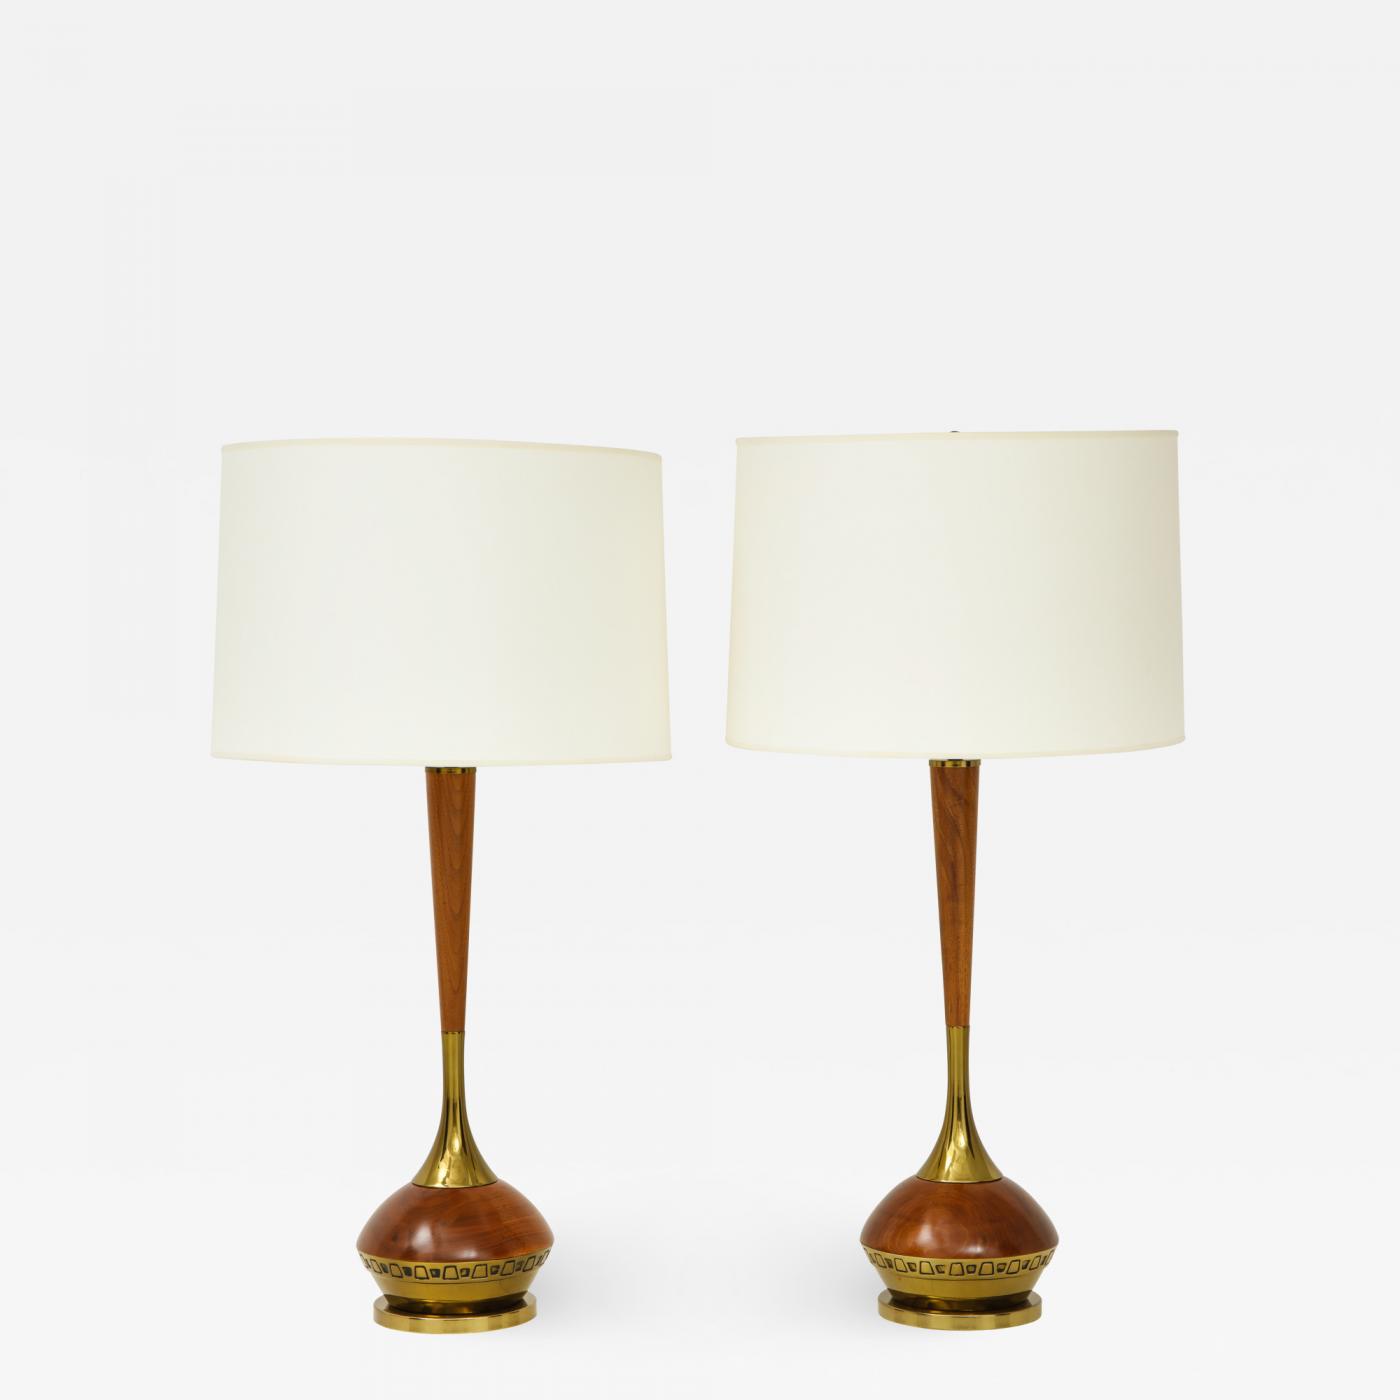 Eenzaamheid tempo genetisch Pair of Mid Century Modern table lamps. By Laurel Lamp Company. for sale  online | Olicore Studio